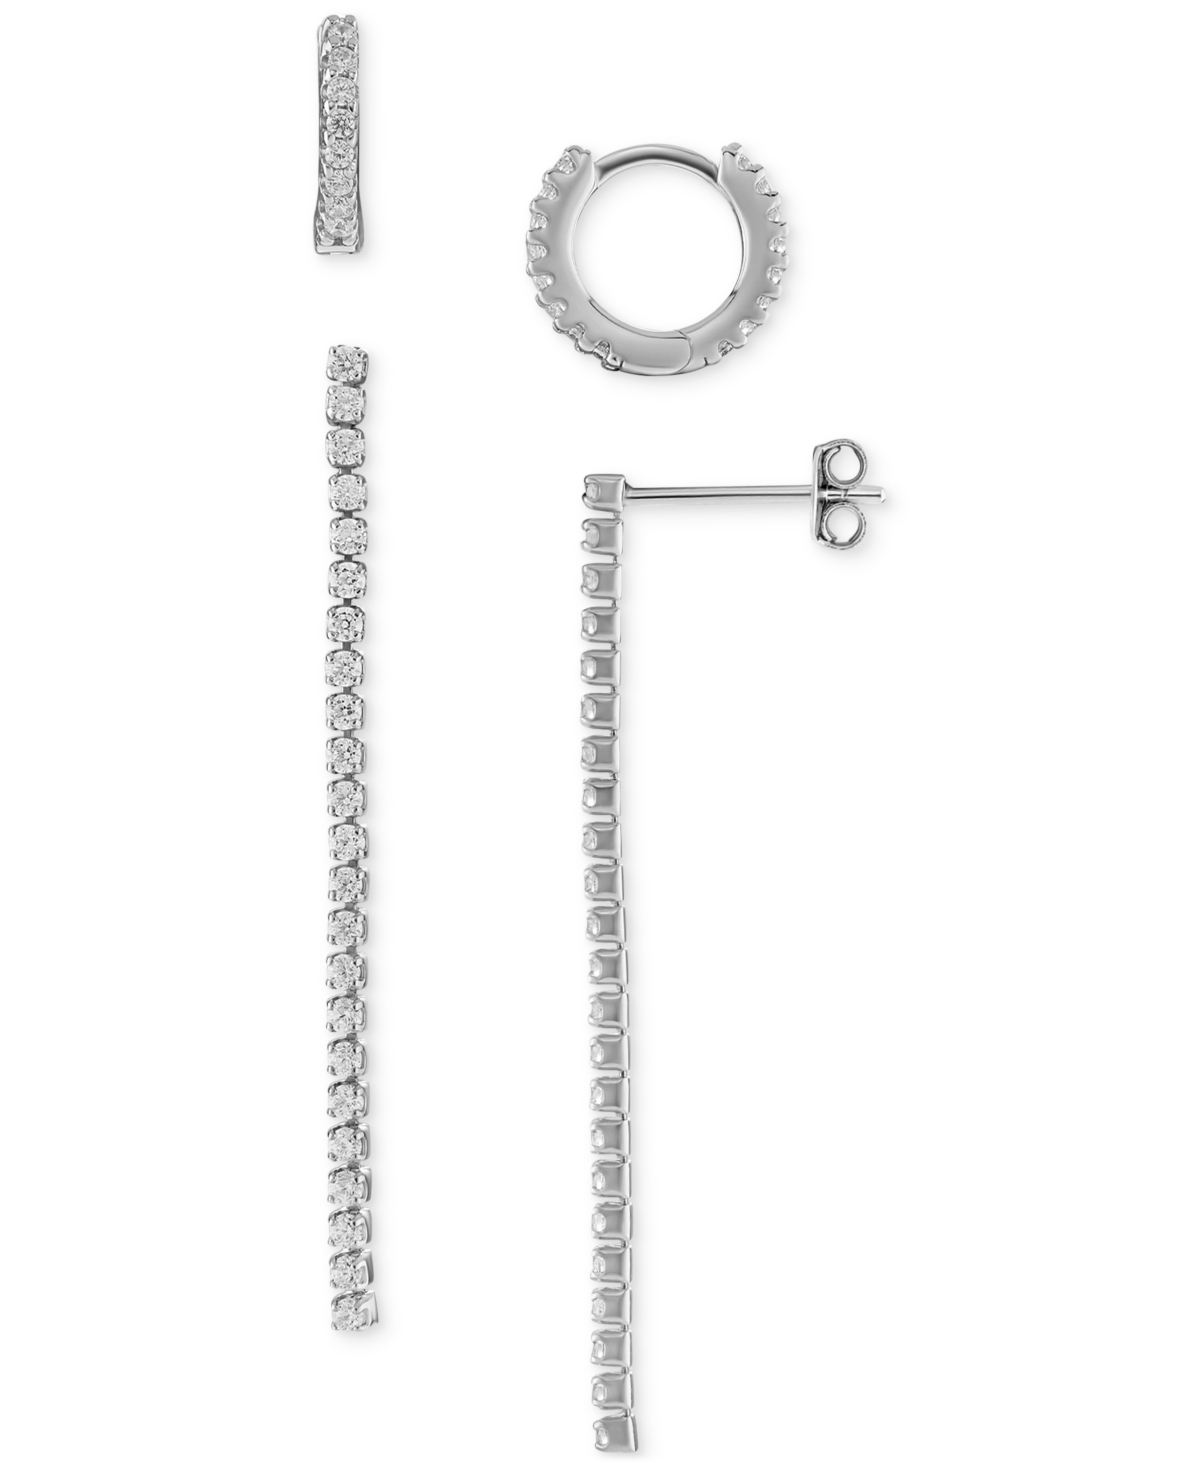 2-Pc. Set Cubic Zirconia Huggie Hoop & Linear Drop Earrings in Sterling Silver, Created for Macy's - Sterling Silver